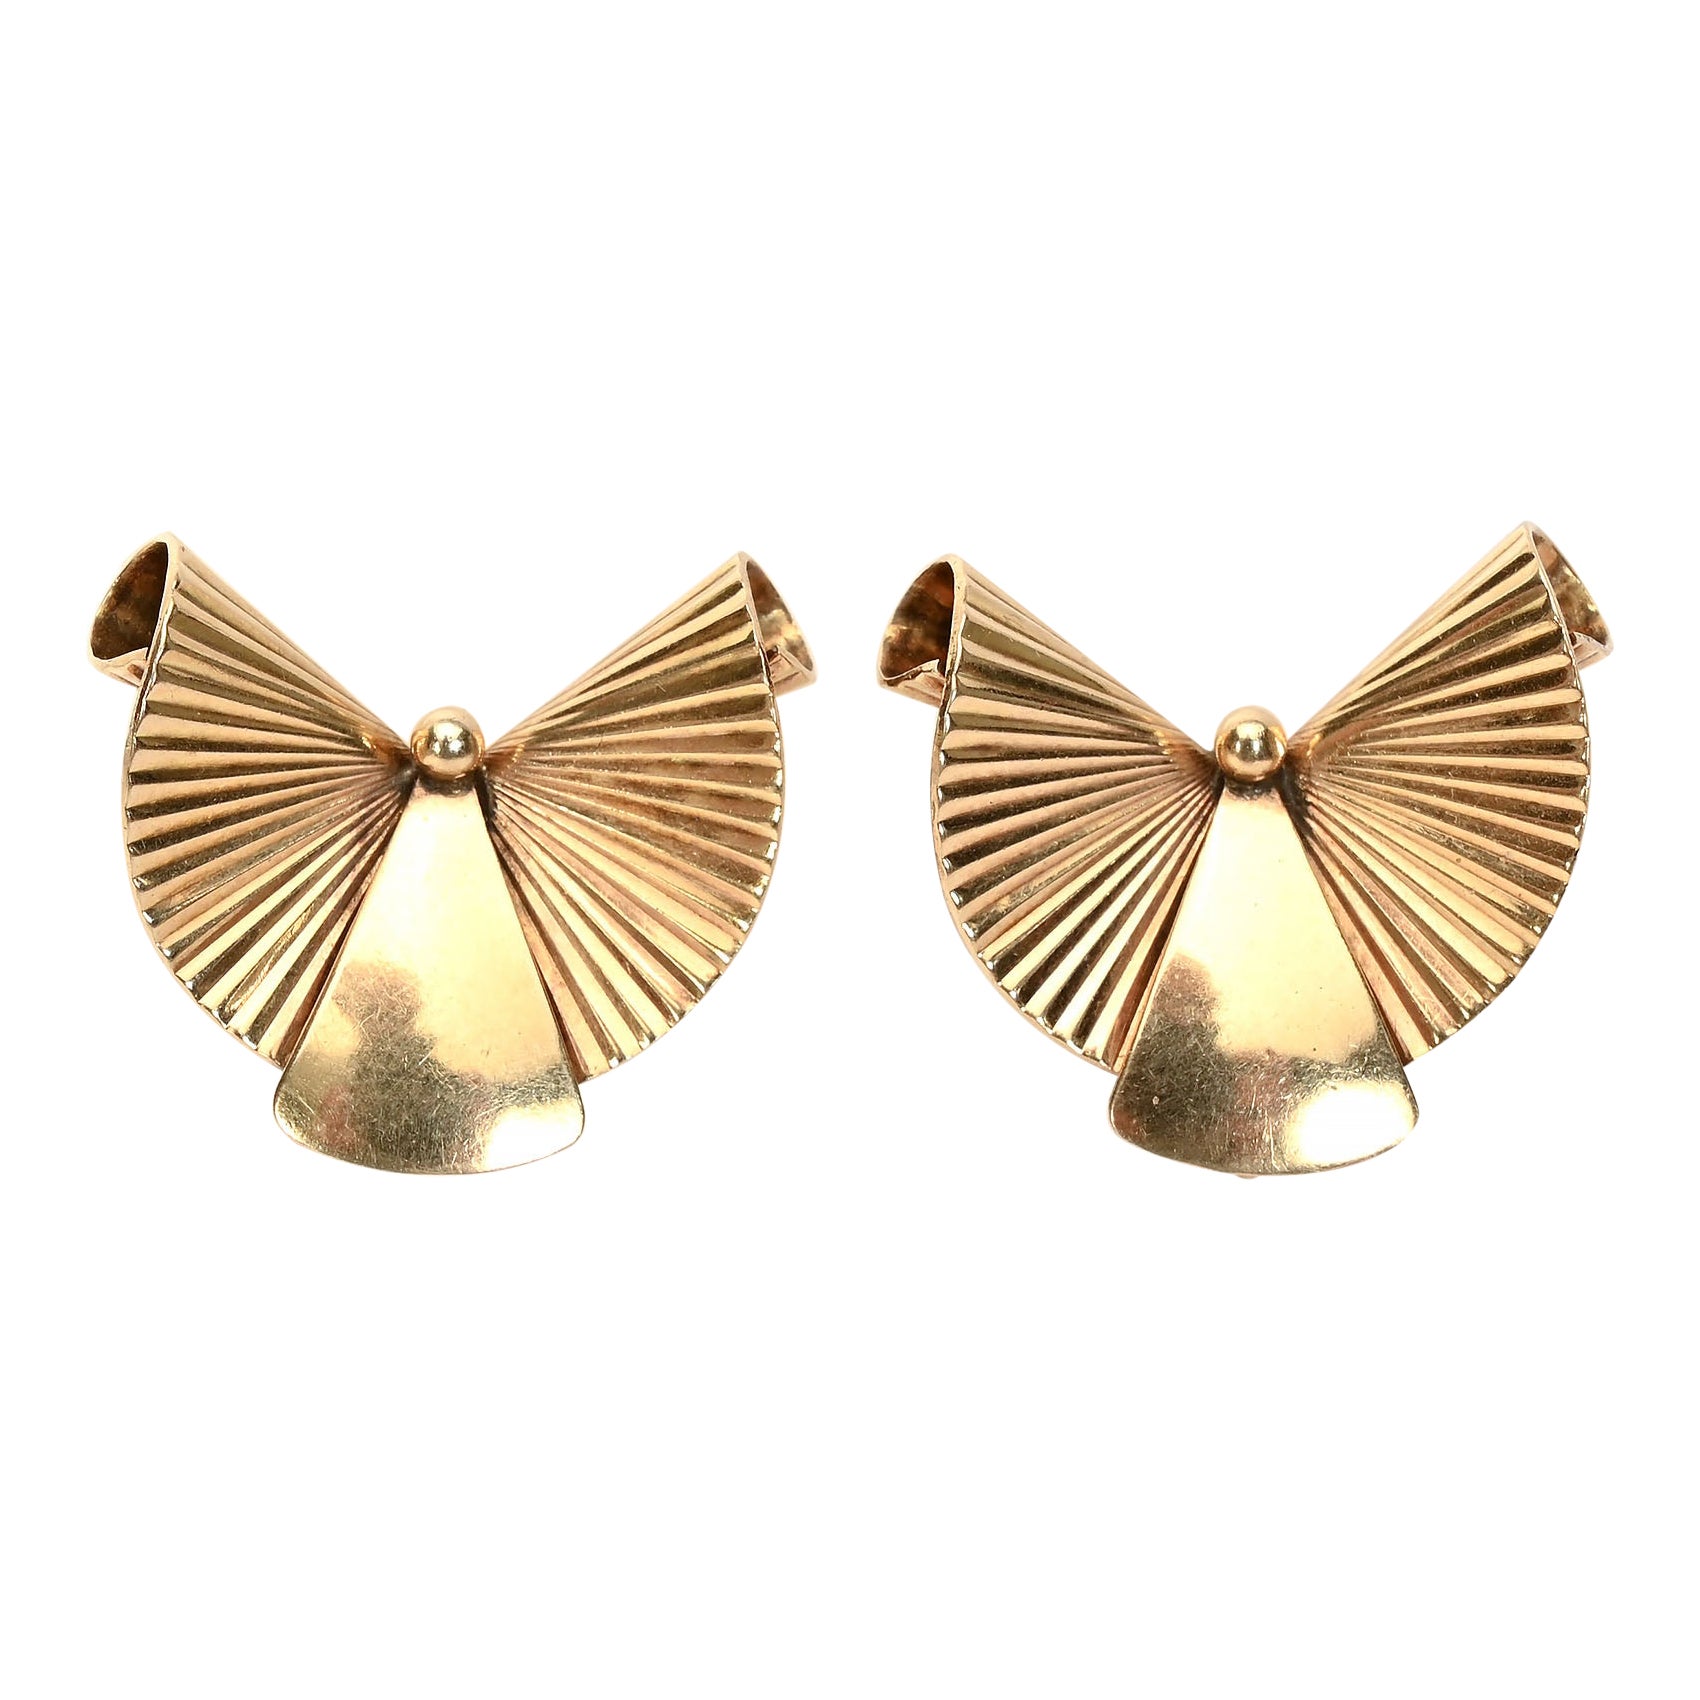 Fächerförmige Retro-Ohrringe aus Gold